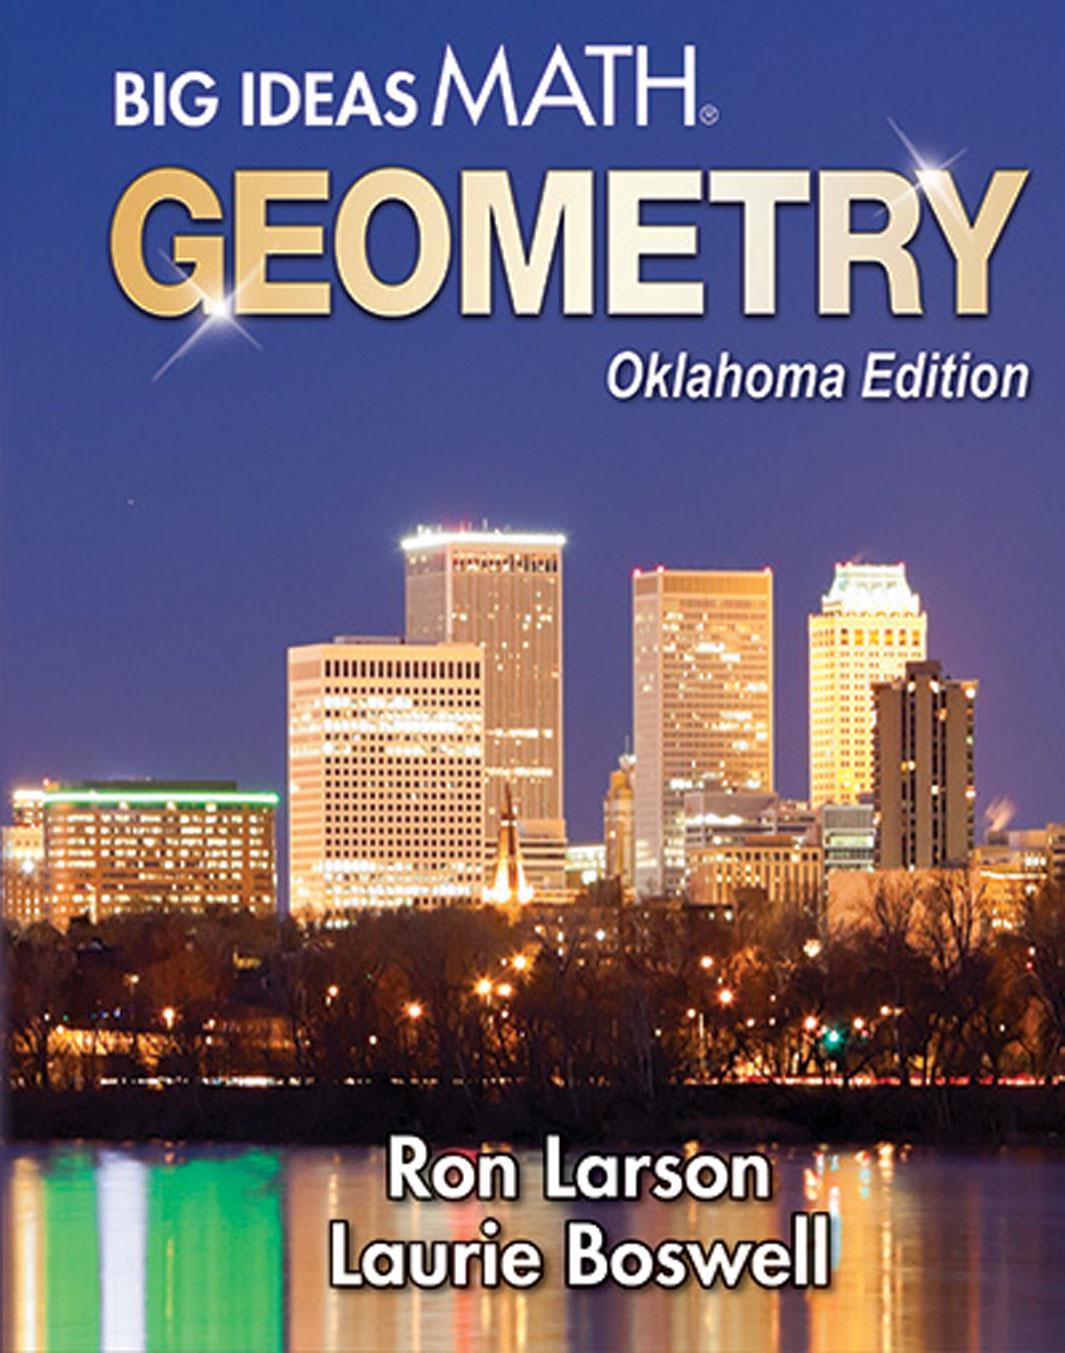 big ideas math geometry oklahoma edition ron larson, laurie boswell 9781635988031